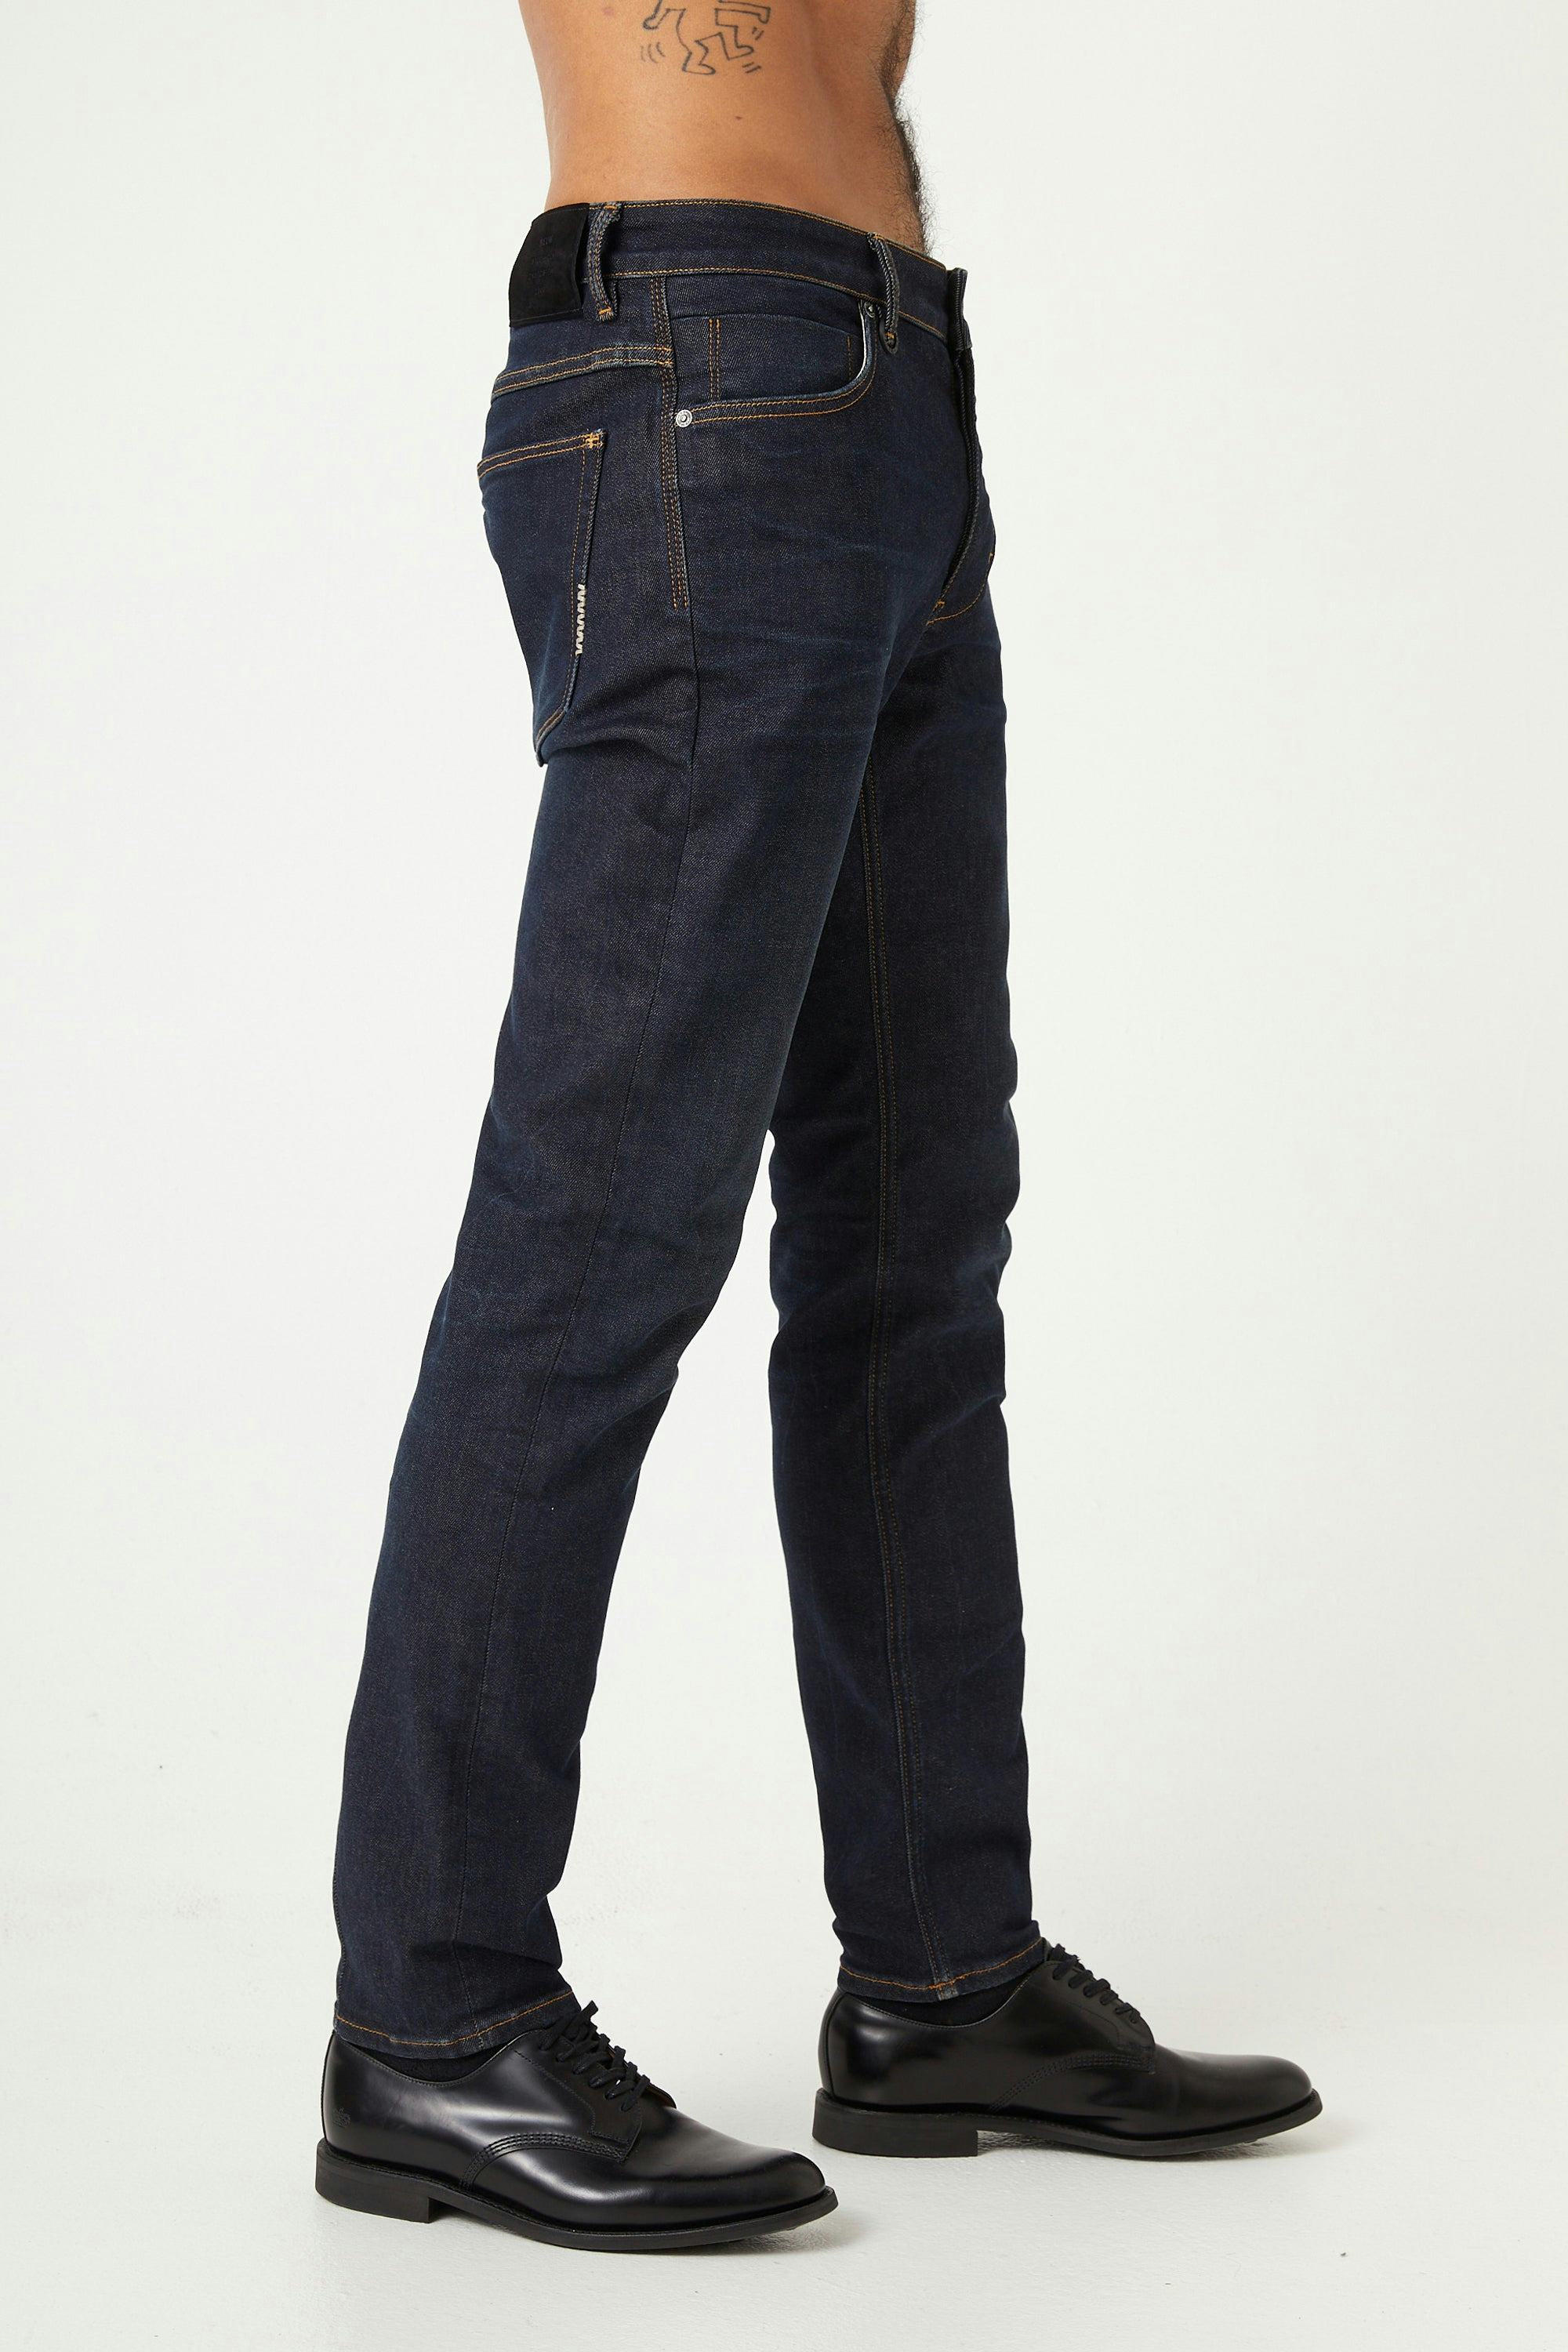 Lou Slim - Typecast Neuw dark black mens-jeans 